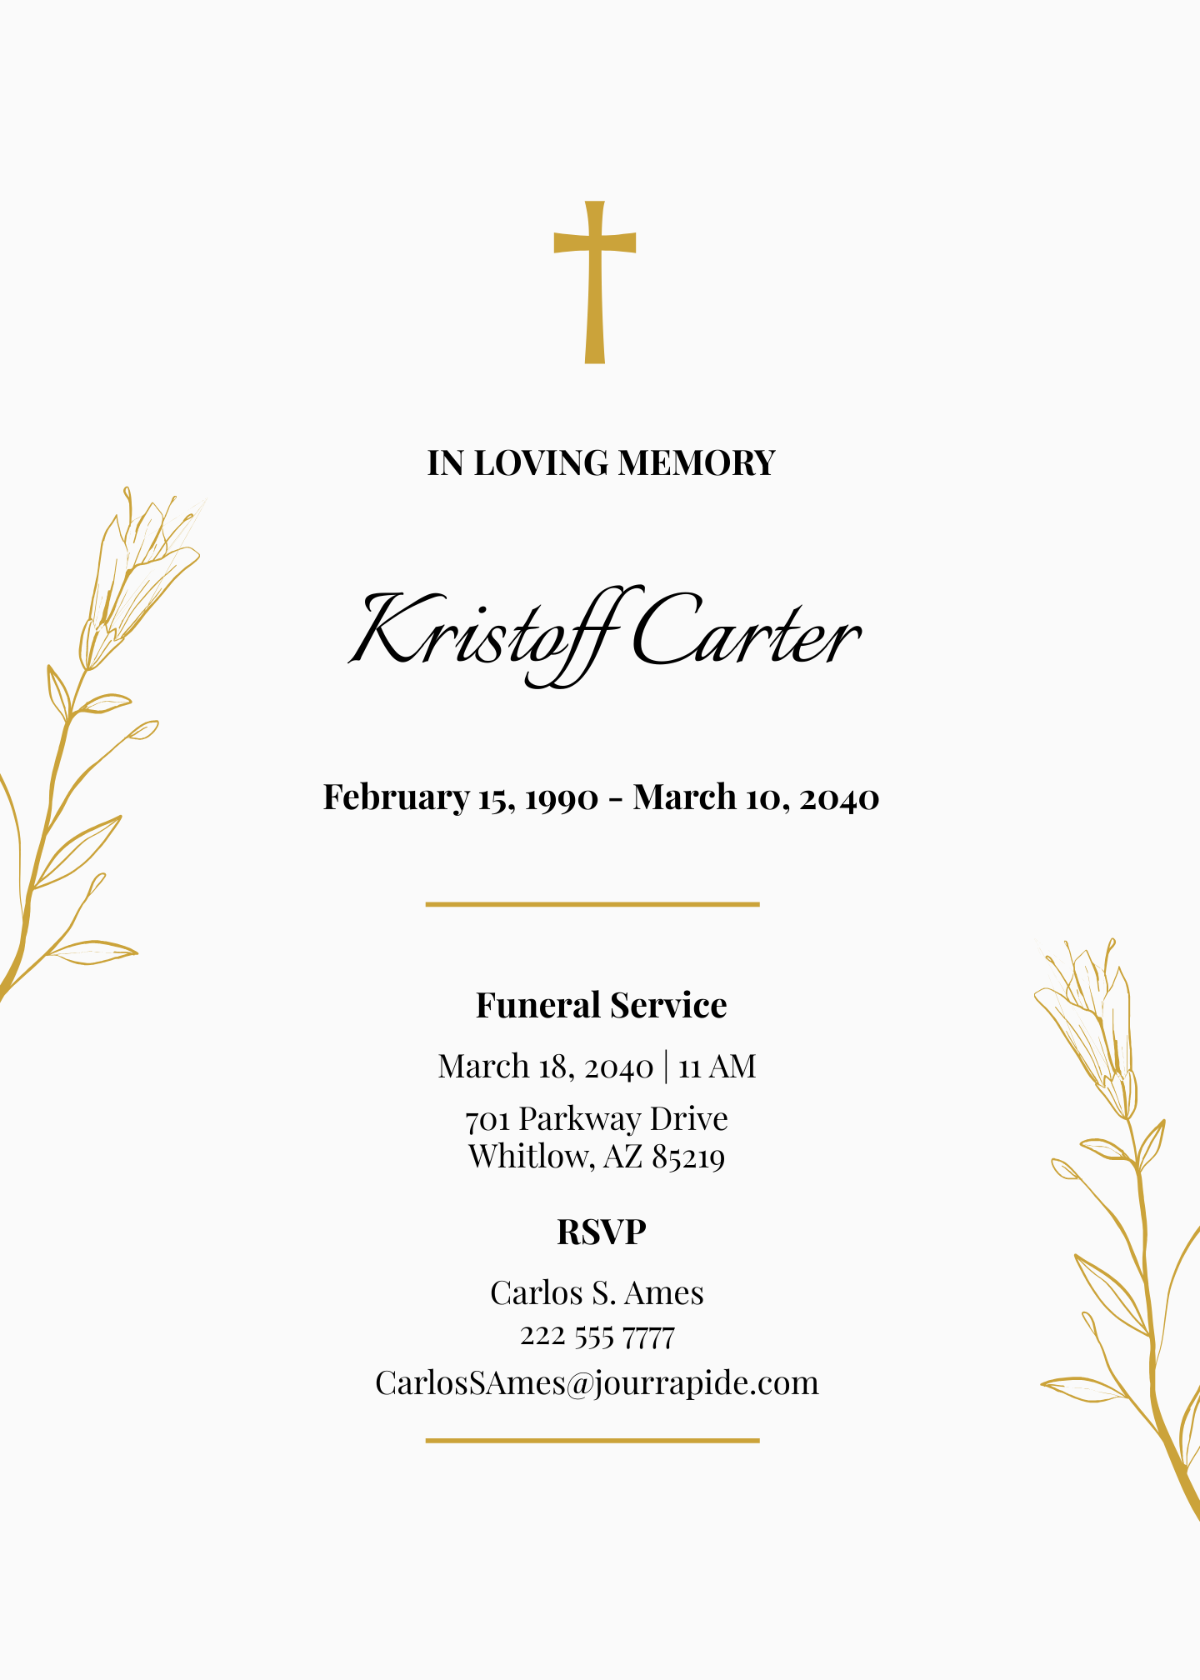 Digital Funeral Announcement Card